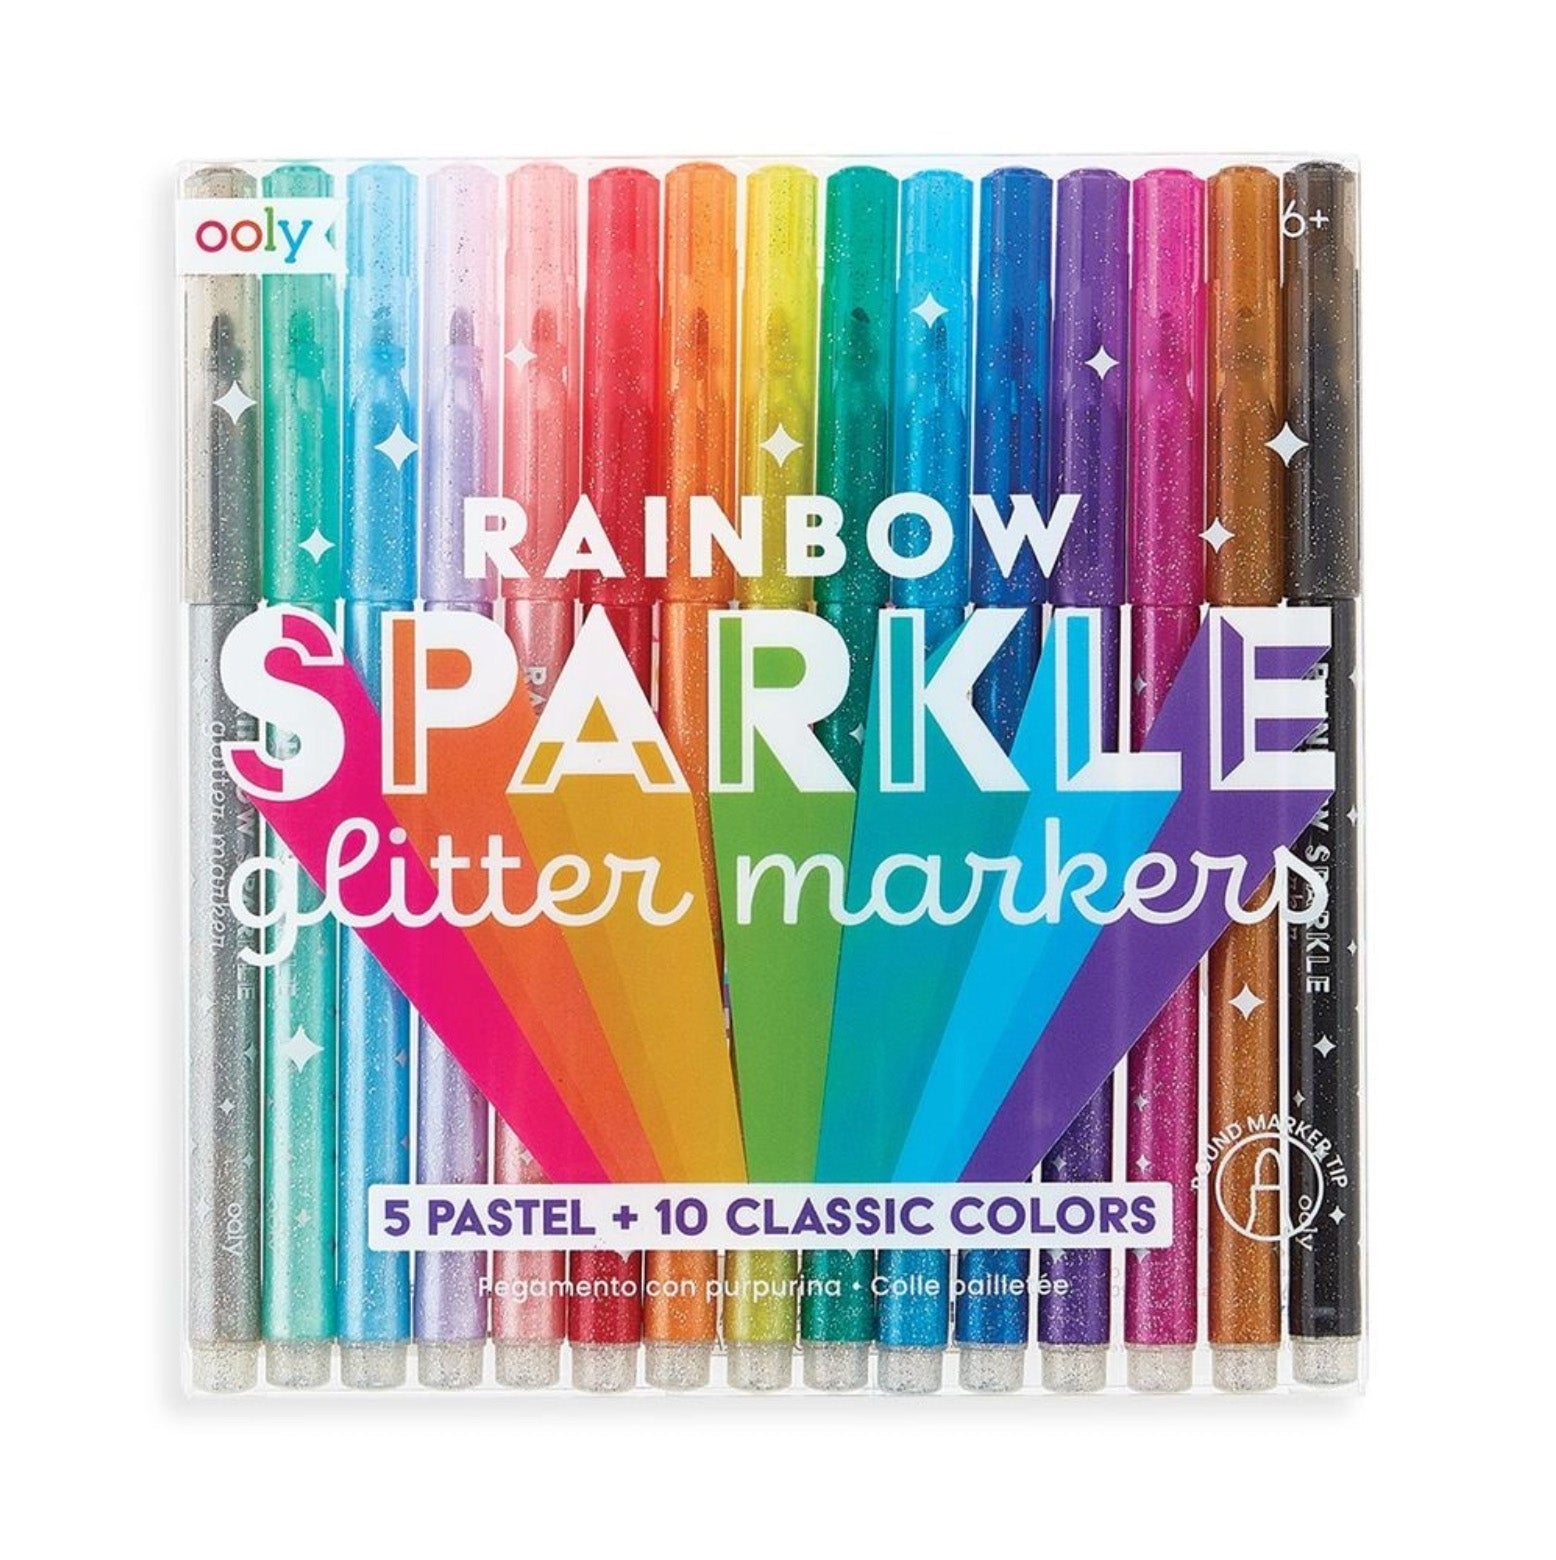 rainbow sparkles glitter markers